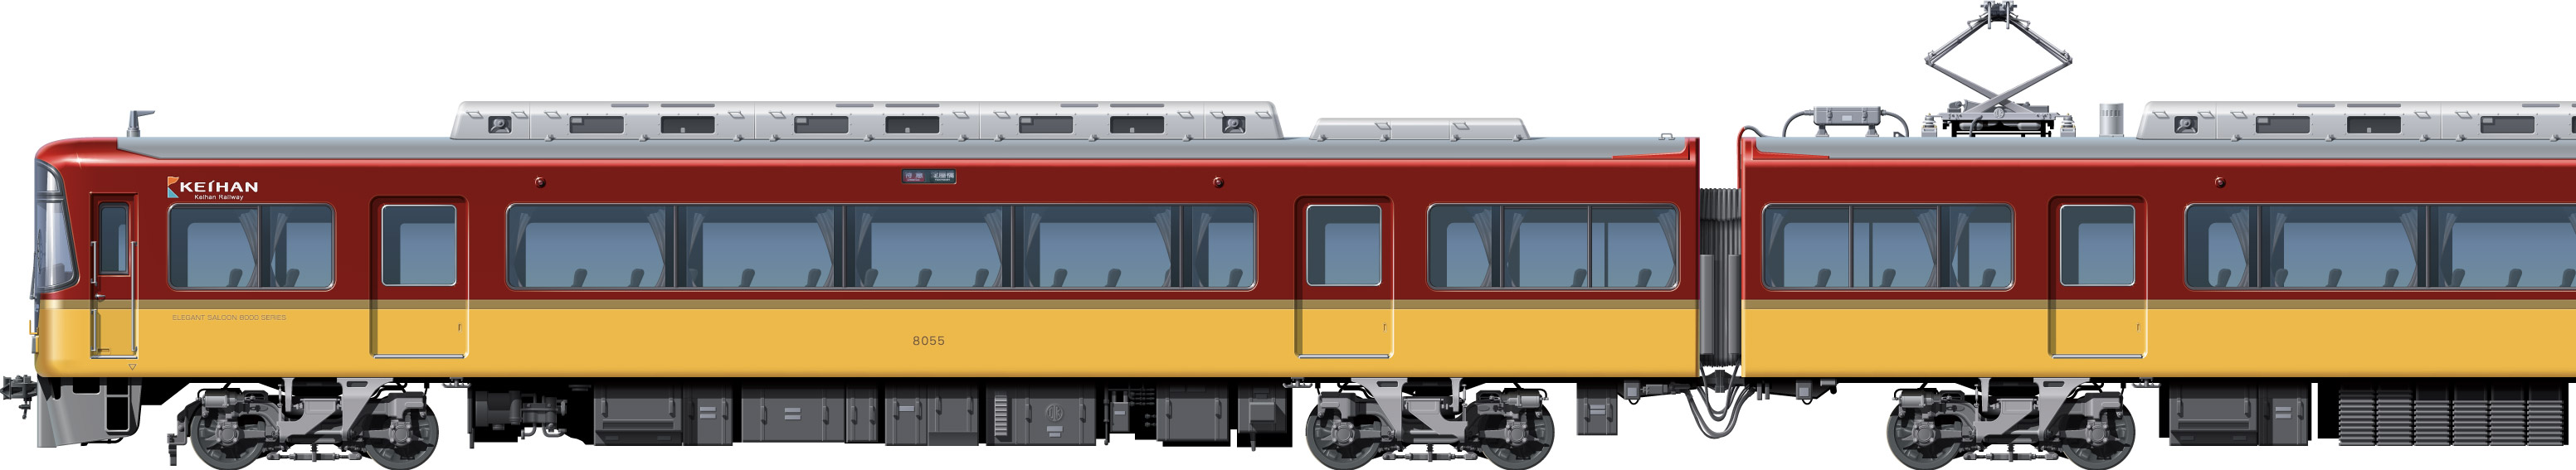 8000n@}@express@ʃCXg@ʃCXg@tgr[CXg@TChr[CXg@CXg@@dS@VVVFCo[^[  keihan Railway illustration  front view@sideview front view